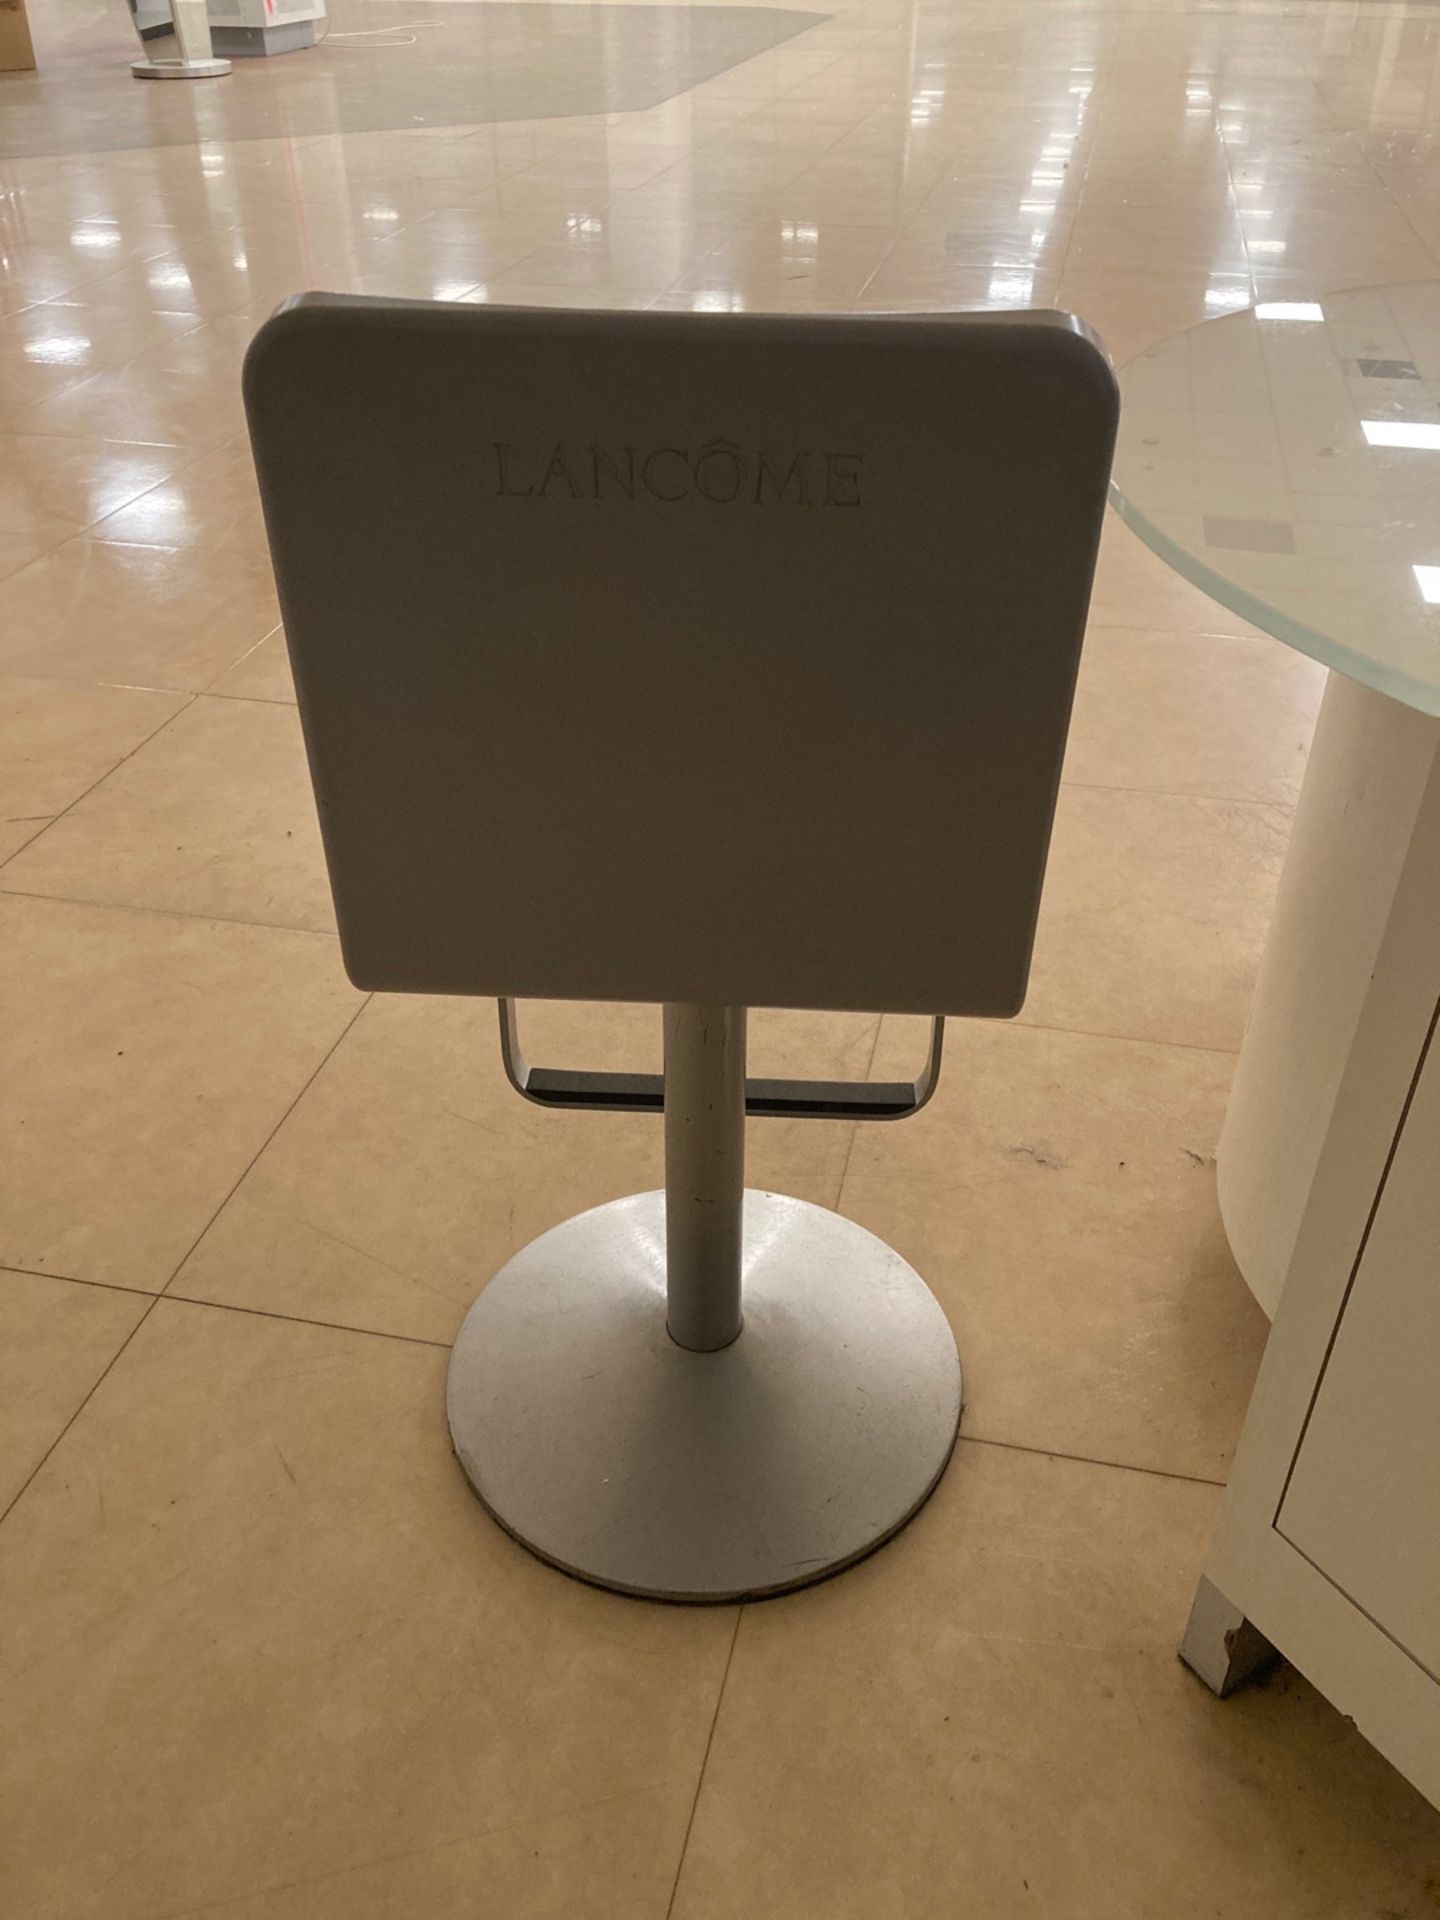 Lancome Display Unit - Image 4 of 8